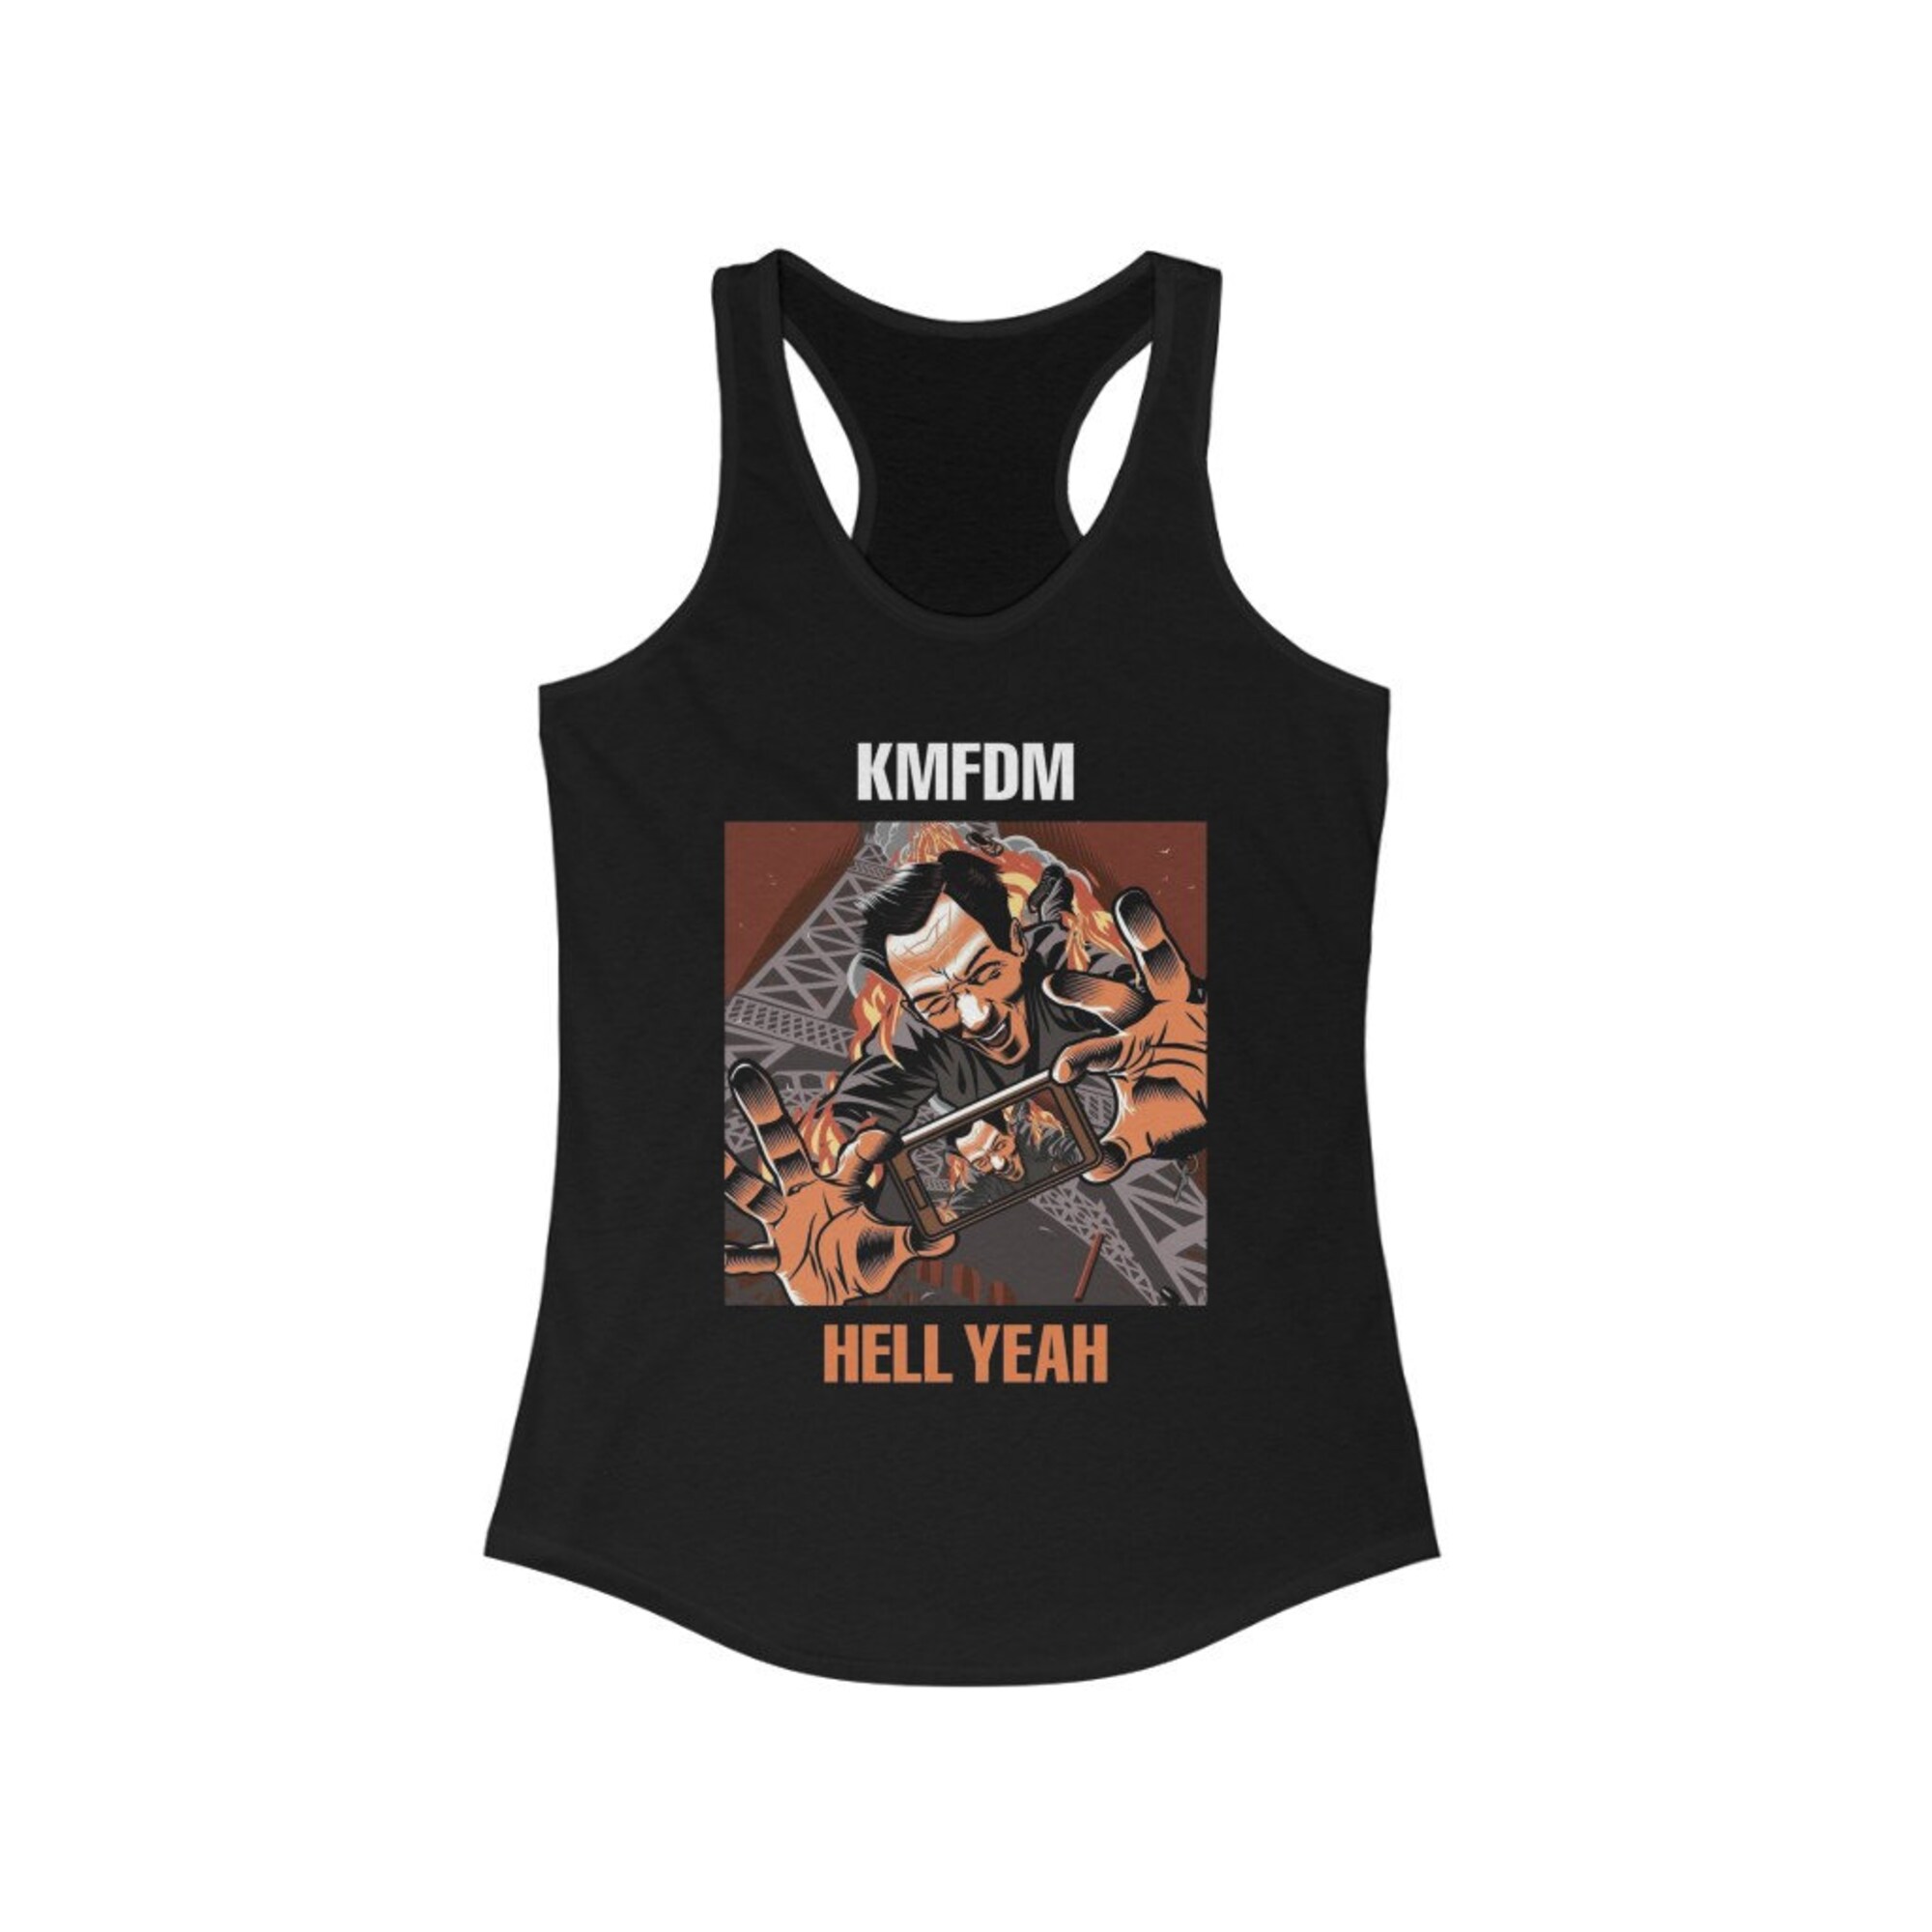 Discover KMFDM Band Women's Tank Top, Hell Yeah Sleeveless Tee, Industrial Rock Band